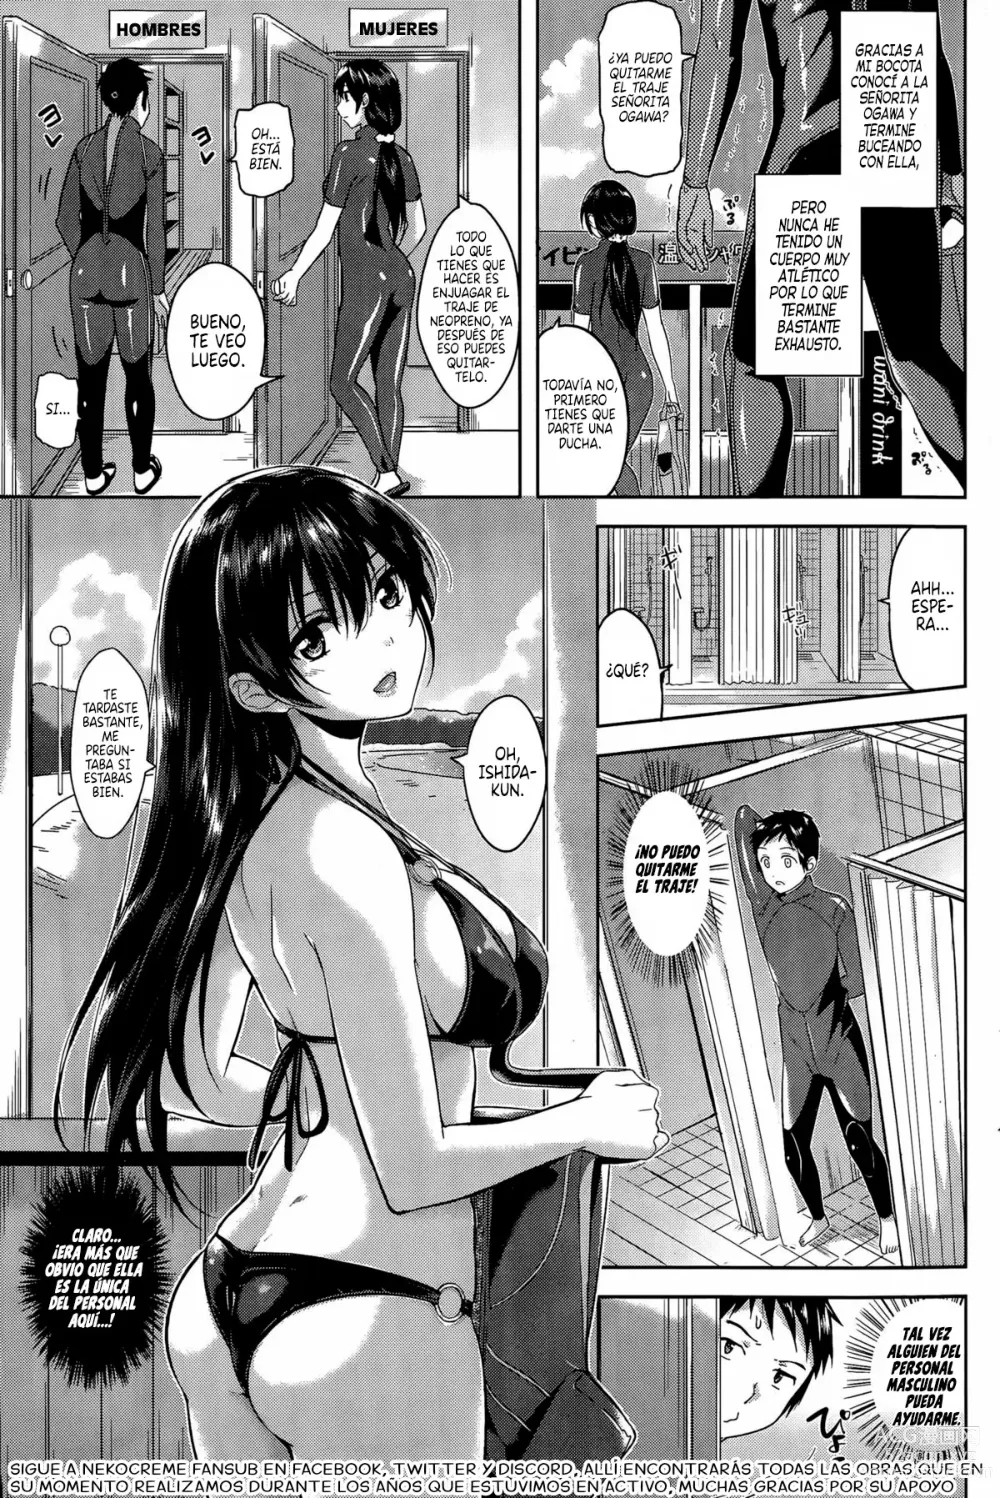 Page 3 of manga Buceo Profundo